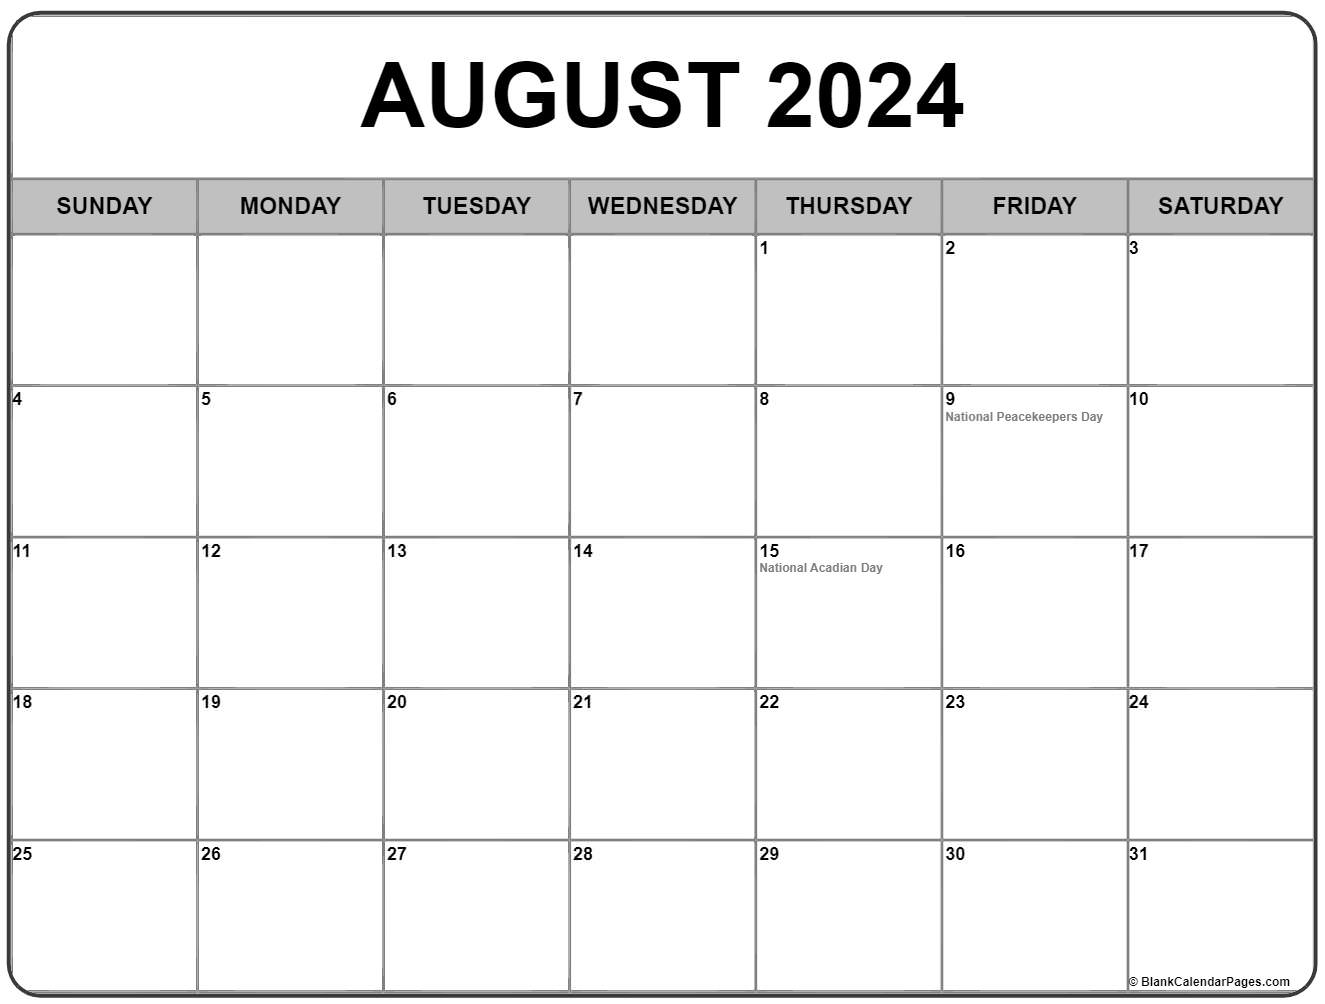 august-2020-calendar-with-holidays